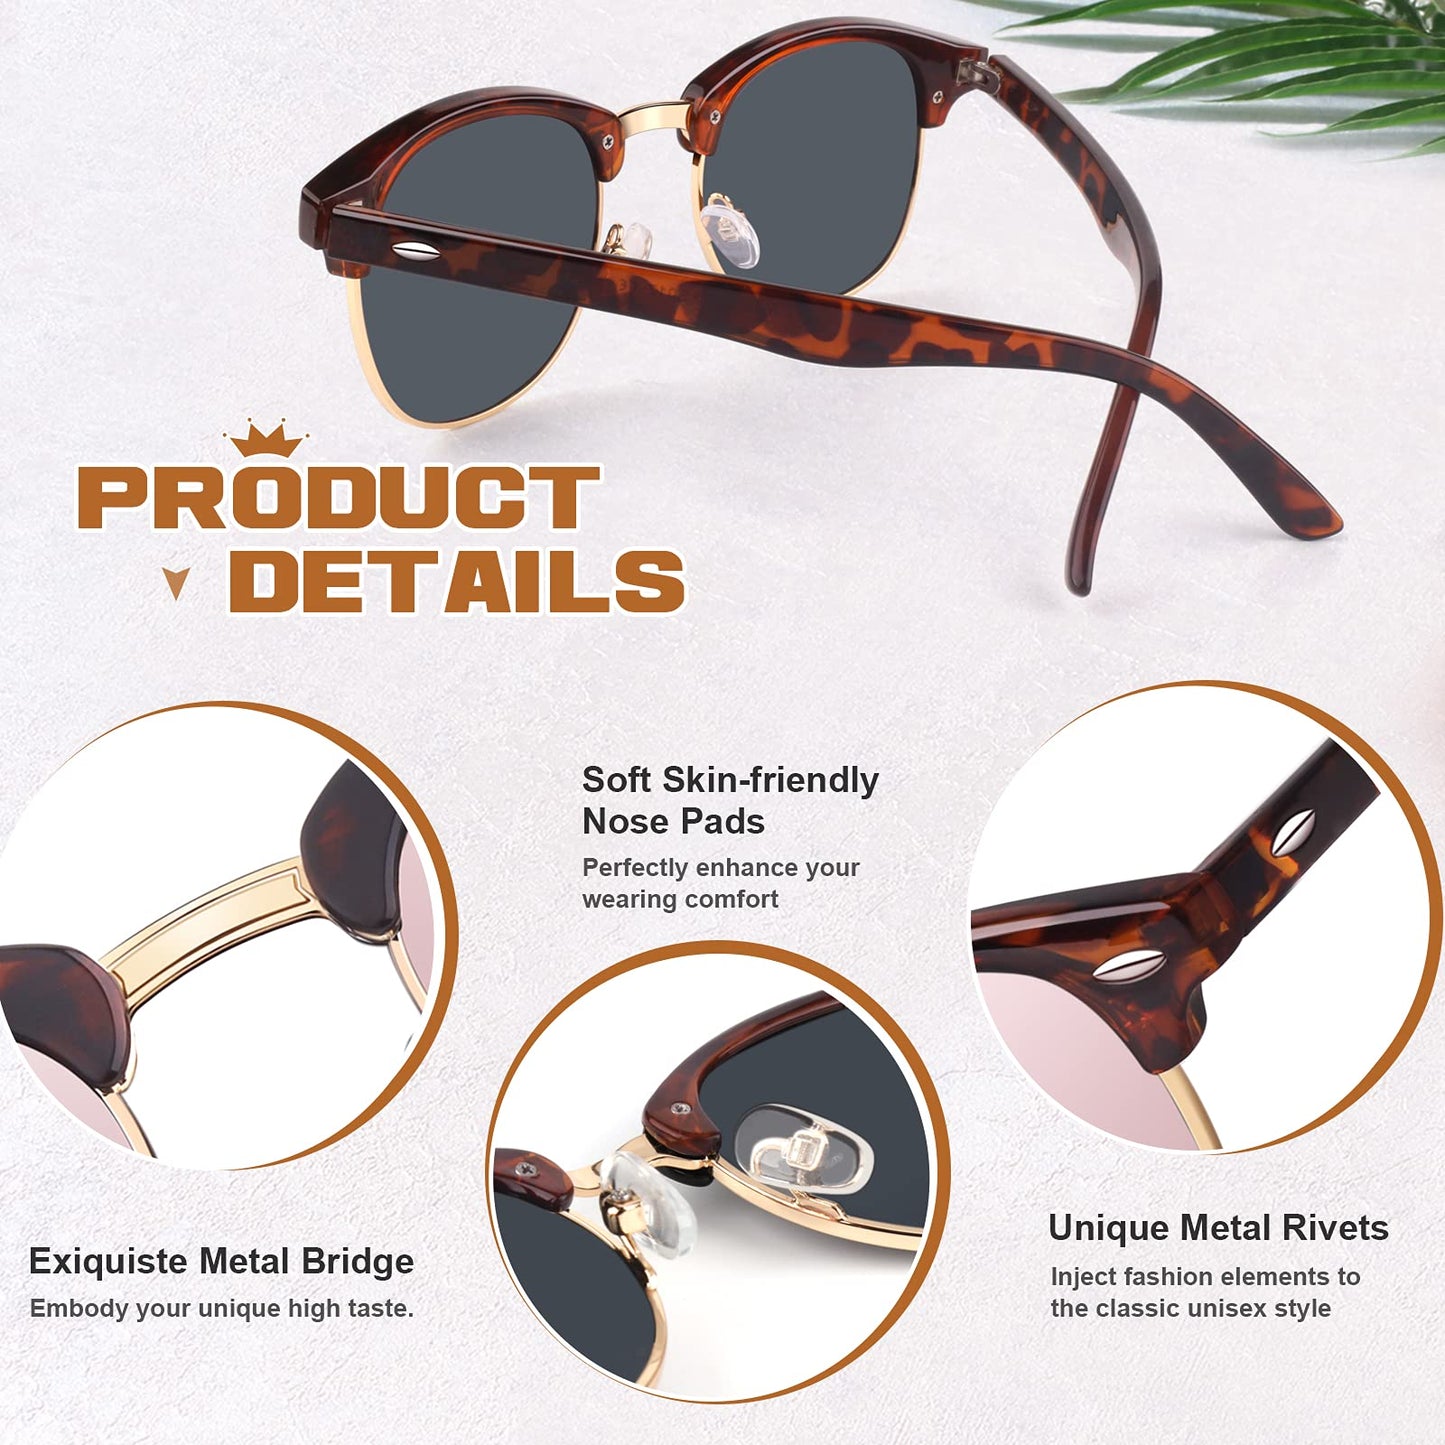 GQUEEN Classic Horn Rimmed Semi Rimless Polarized Sunglasses for Men Women GQO6